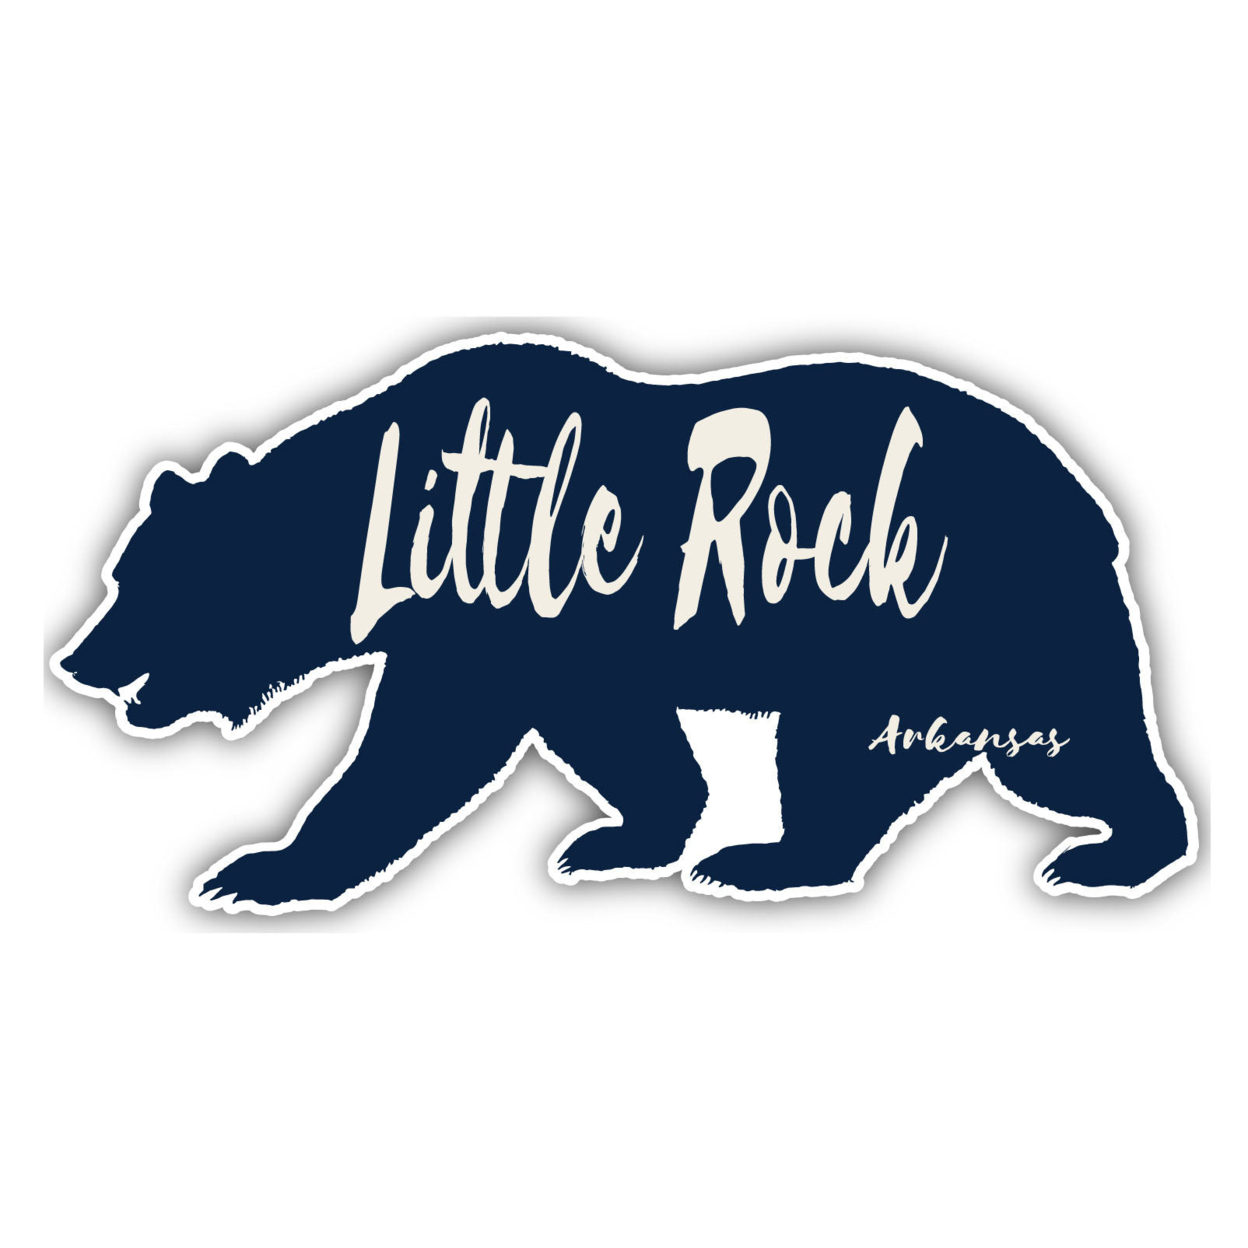 Little Rock Arkansas Souvenir Decorative Stickers (Choose Theme And Size) - 4-Inch, Adventures Awaits